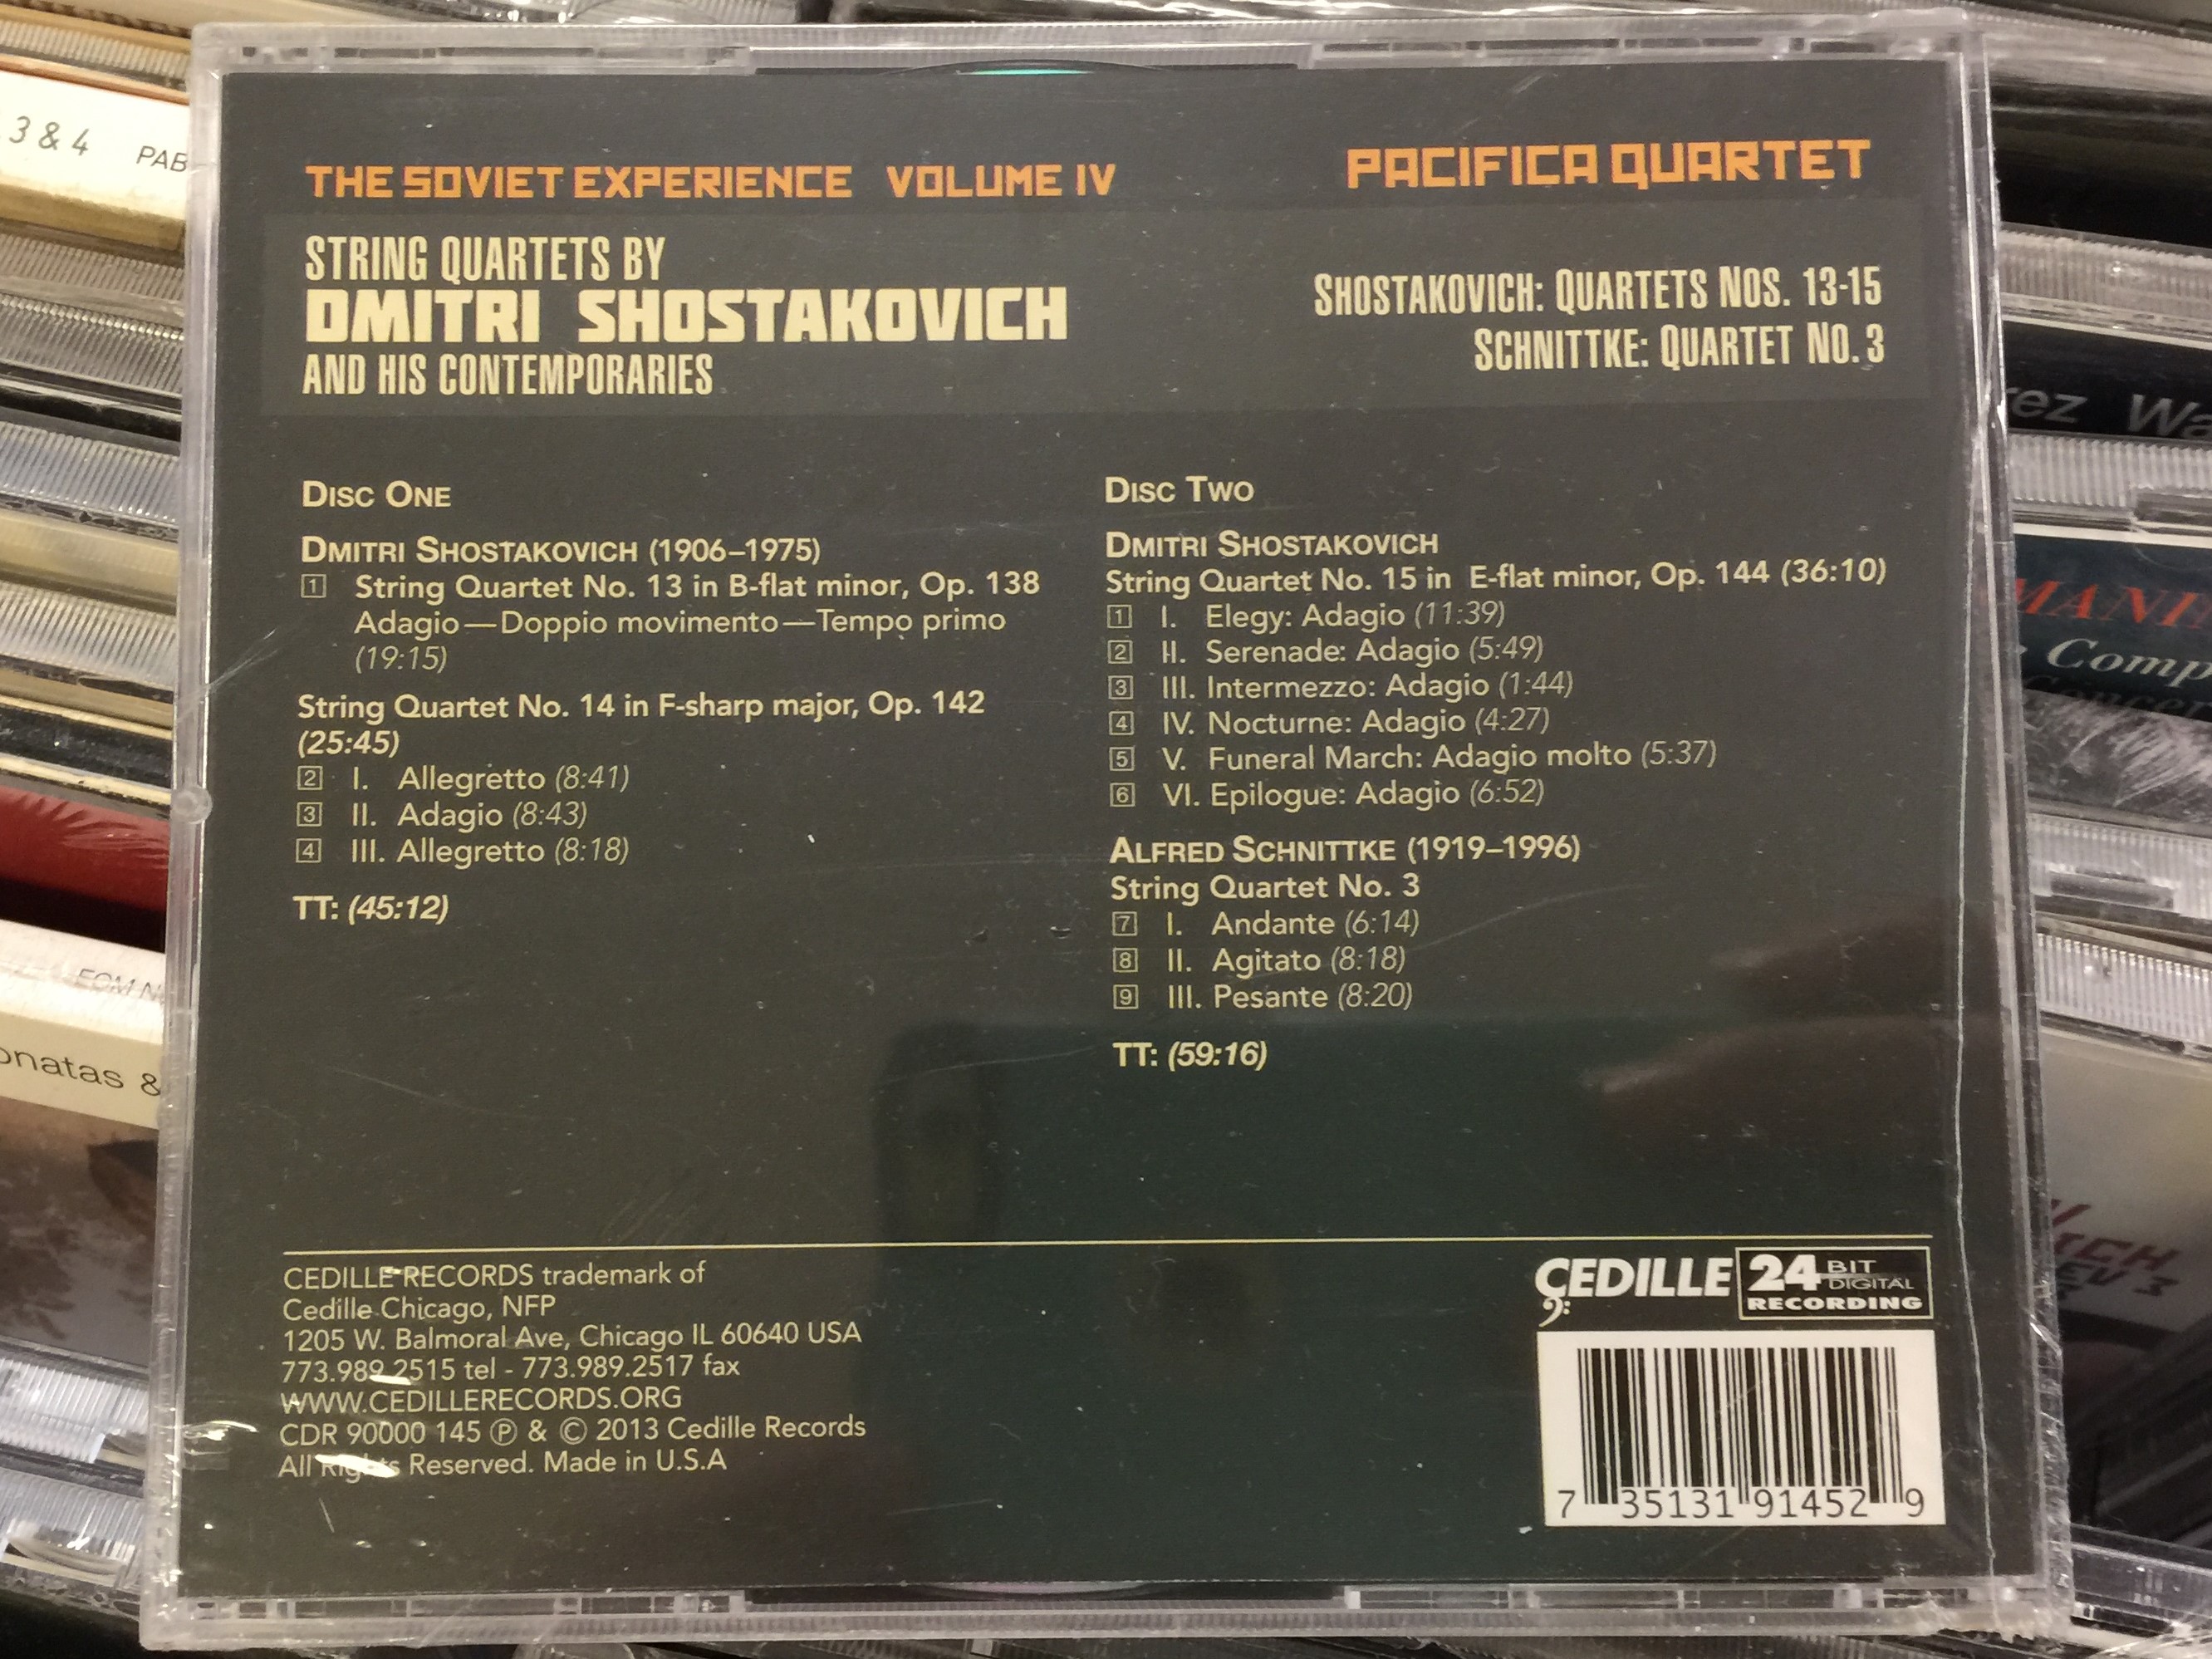 the-soviet-experience-volume-iv-string-quartets-by-dimitri-shostakovich-and-his-contemporaries-shostakovich-quartets-nos.-13-15-schnittke-quartet-no.-3-pacifica-quartet-cedille-records-2x.jpg